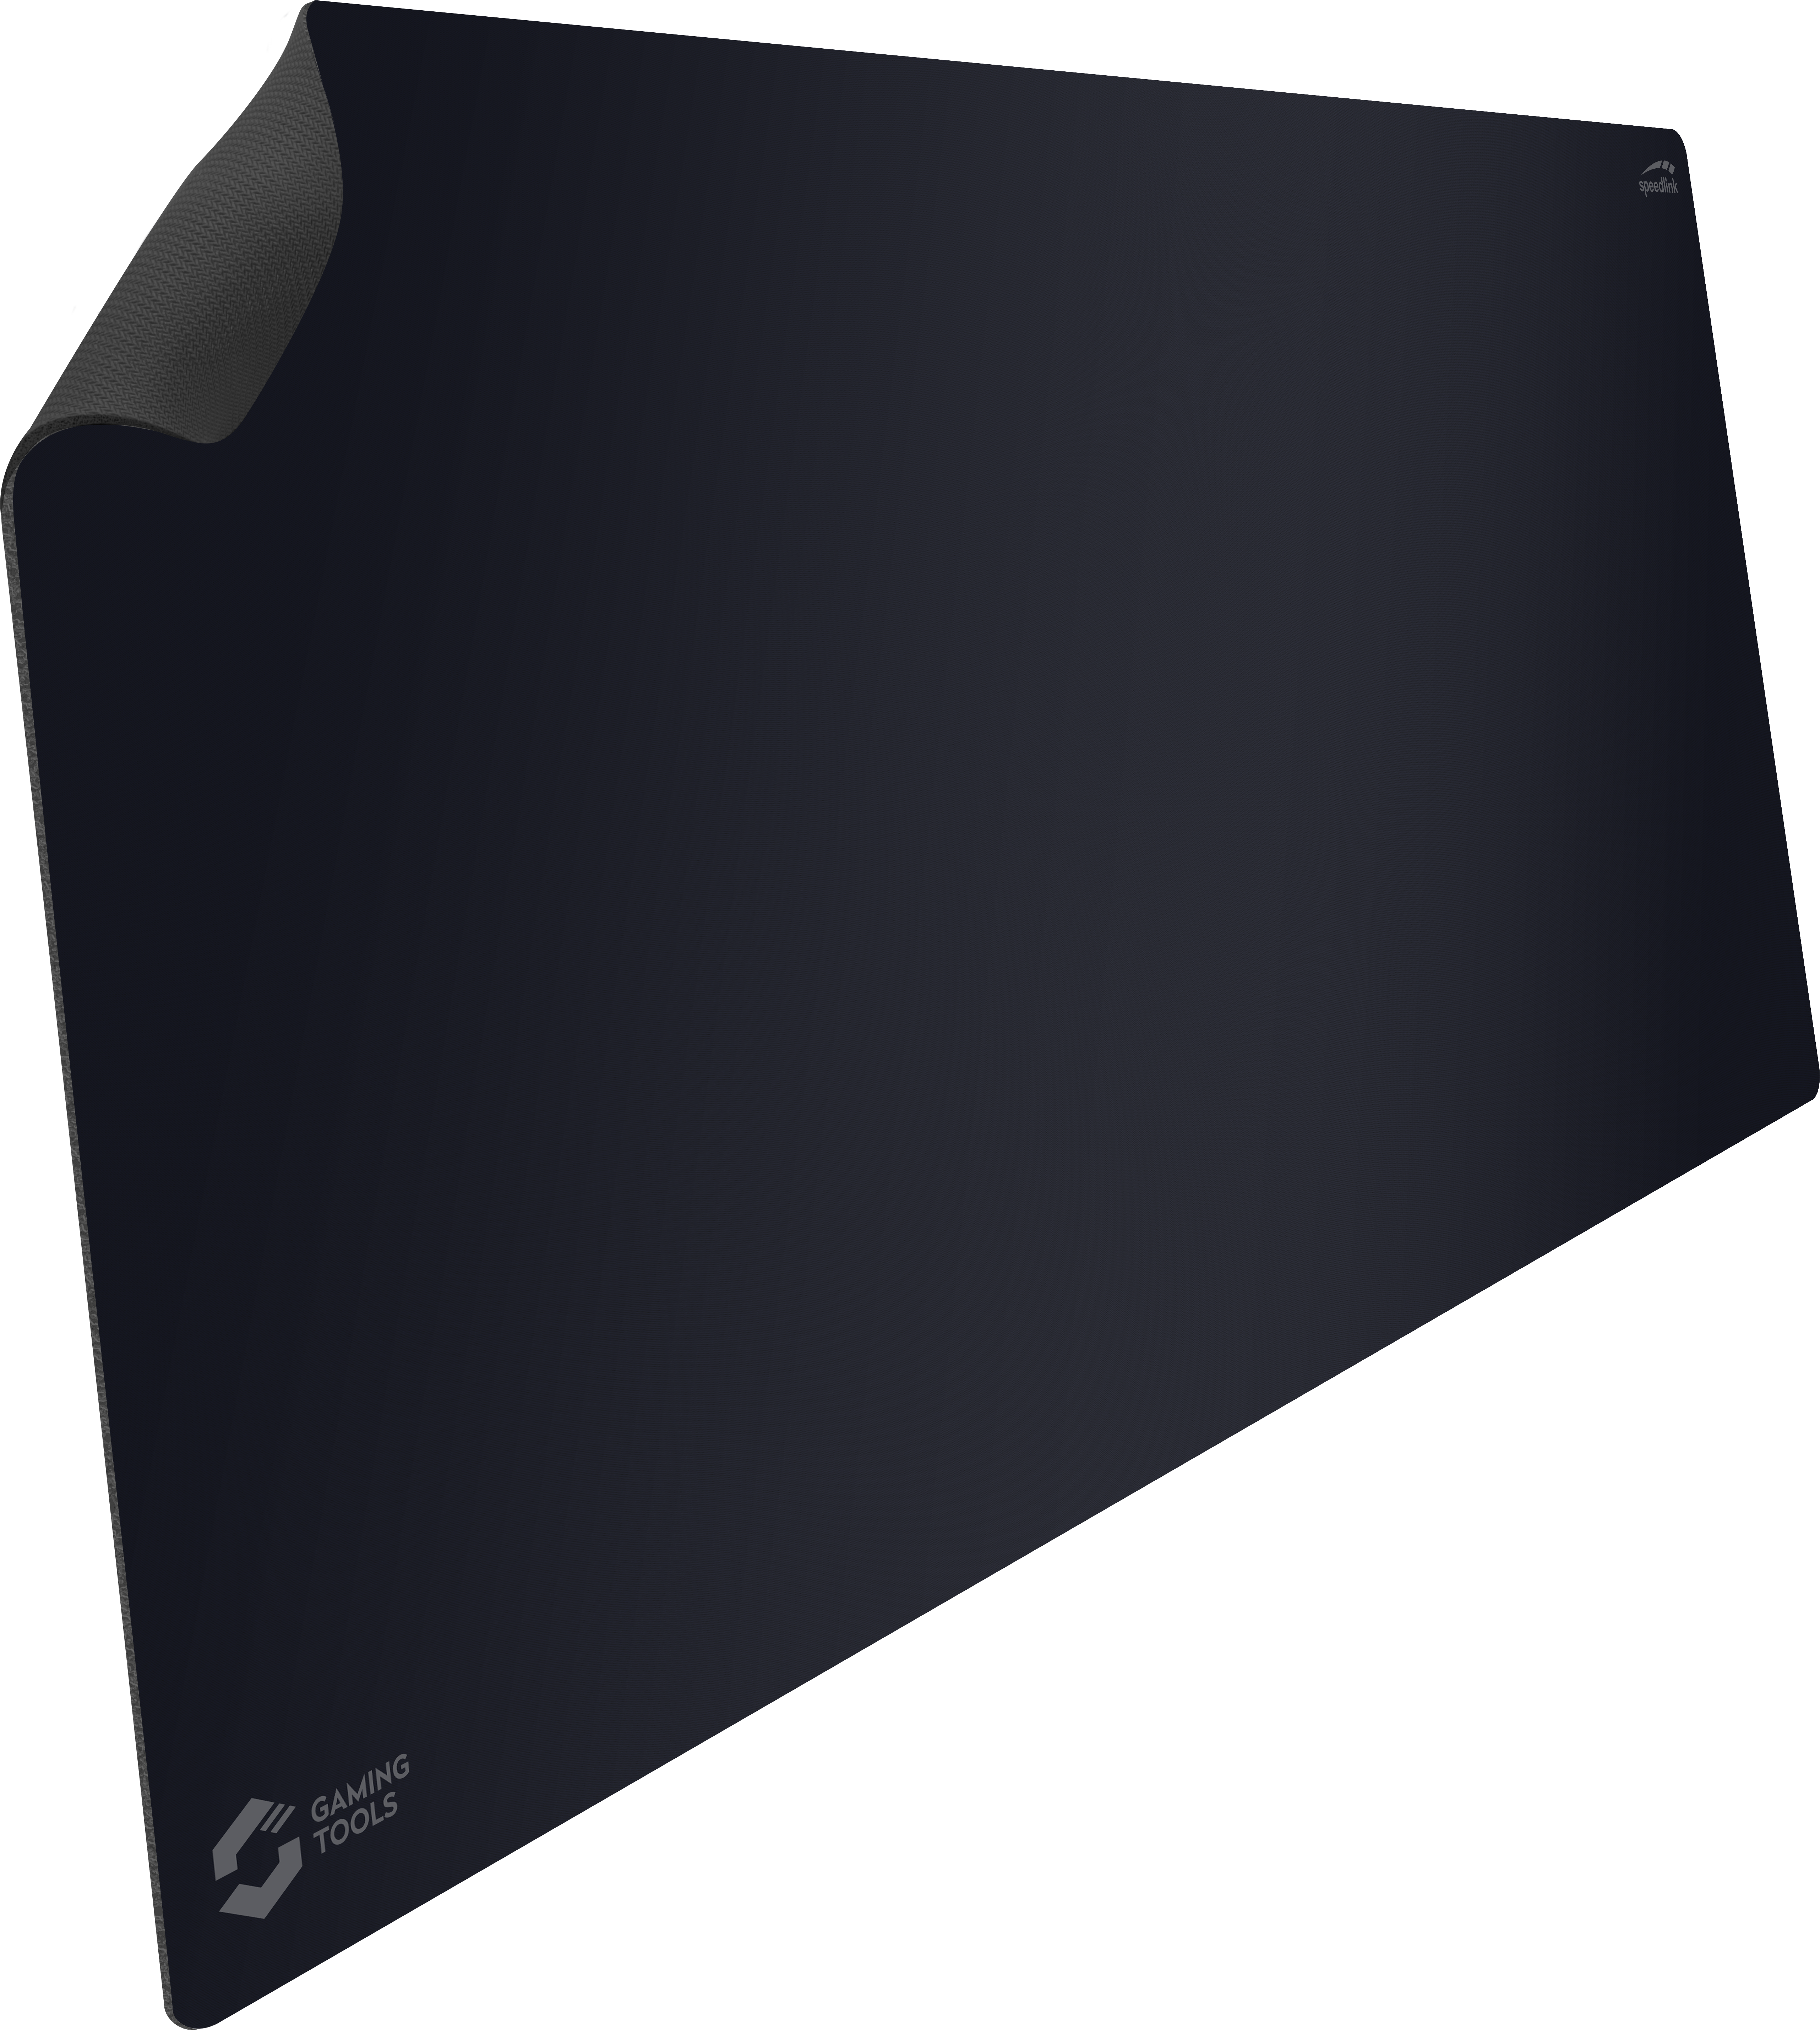 ATECS Soft Gaming Mousepad - Size XXL, black